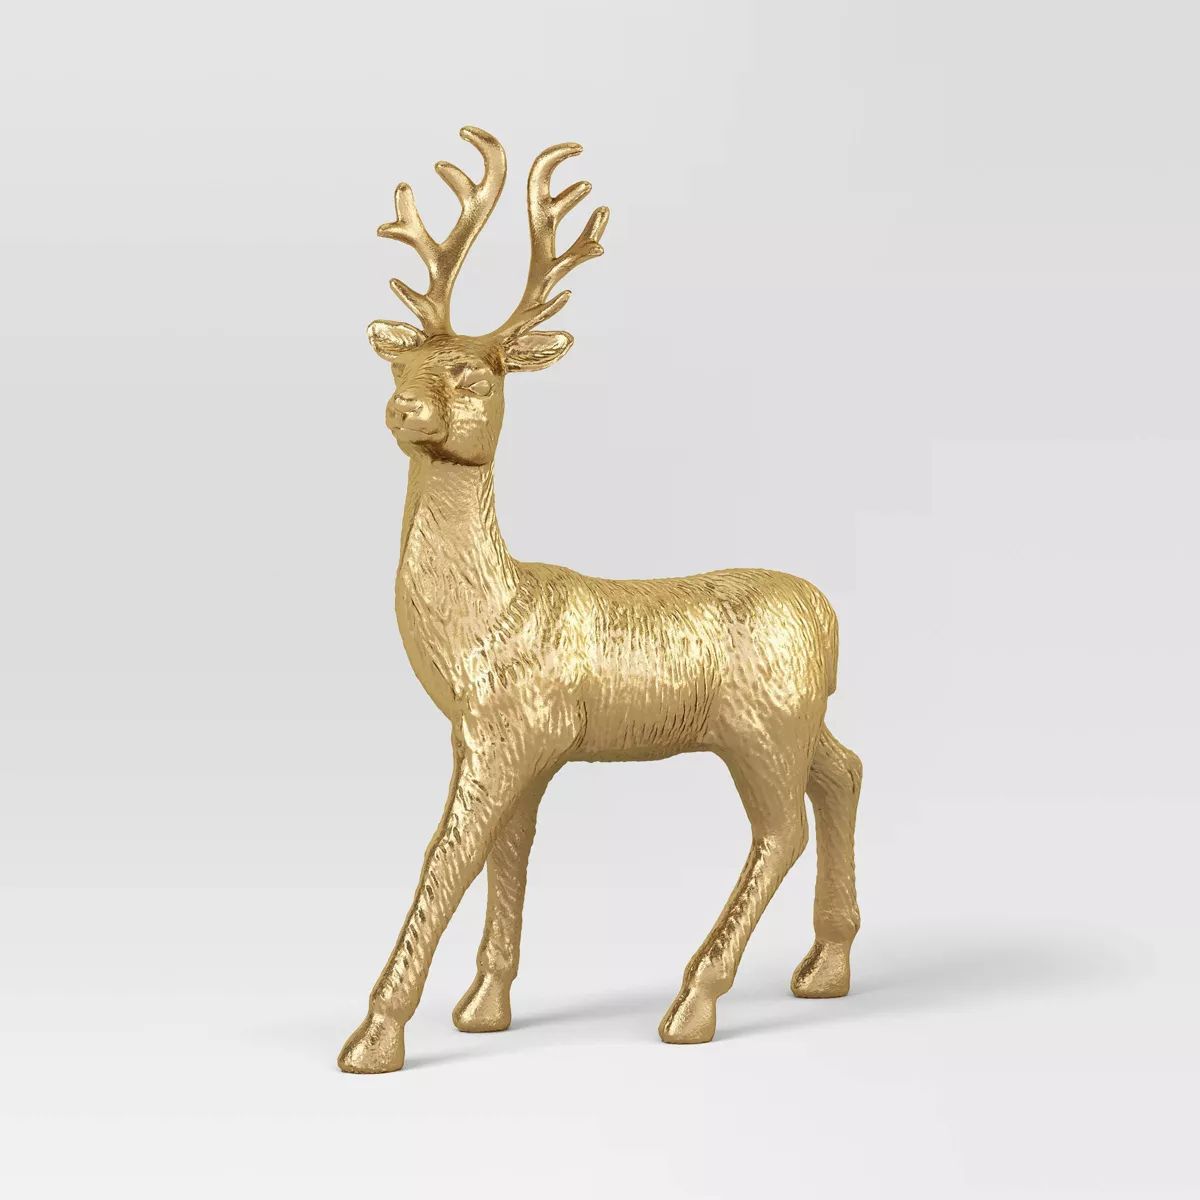 12.5" Metallic Plastic Standing Deer Animal Christmas Figurine - Wondershop™ Gold | Target